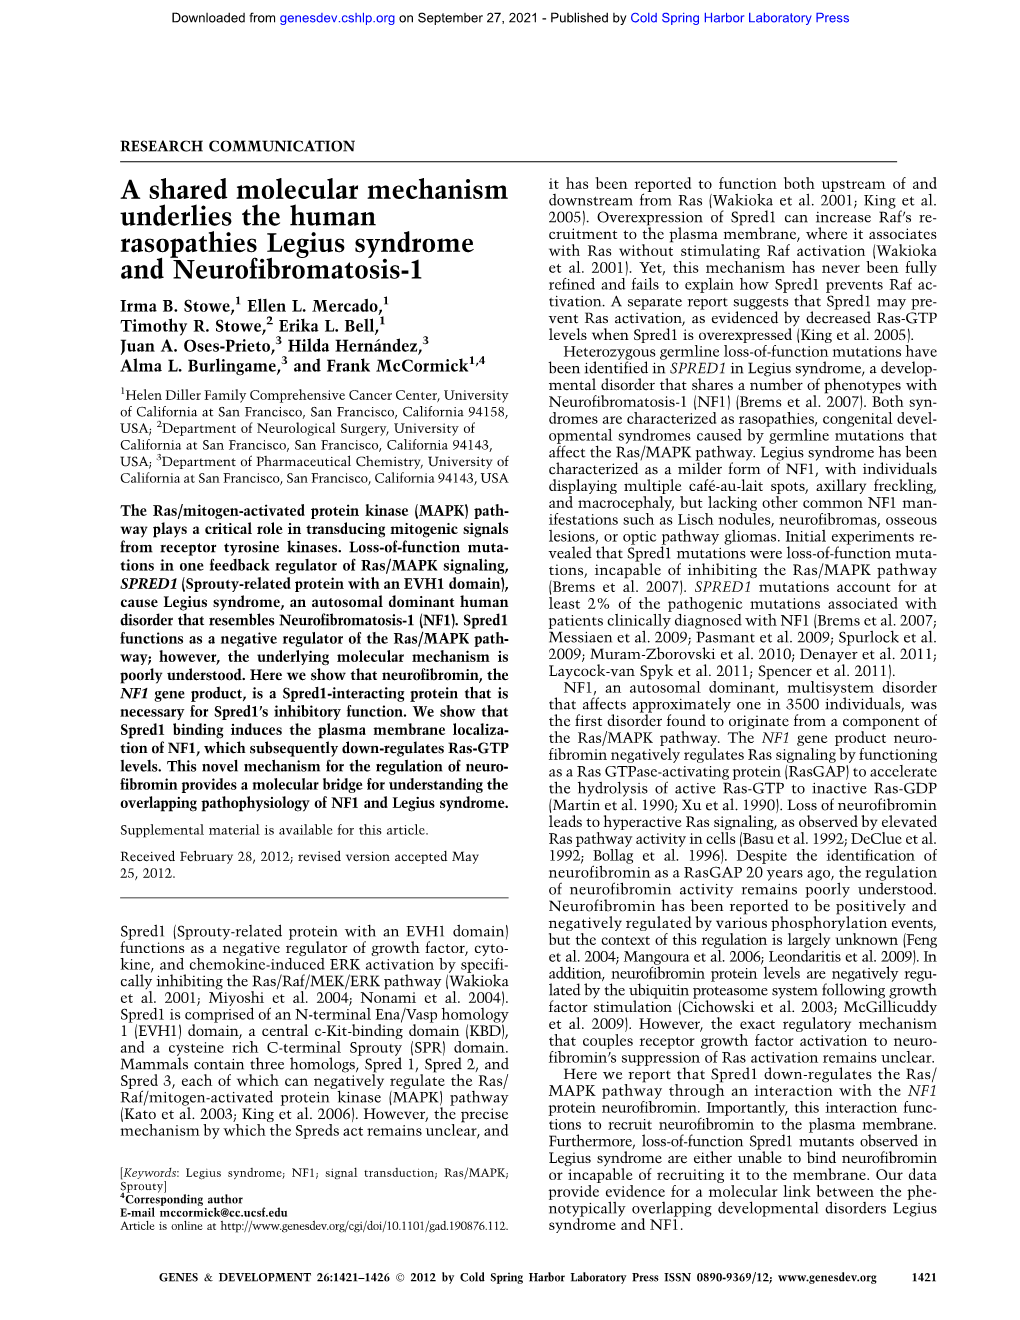 A Shared Molecular Mechanism Underlies the Human Rasopathies Legius Syndrome and Neurofibromatosis-1